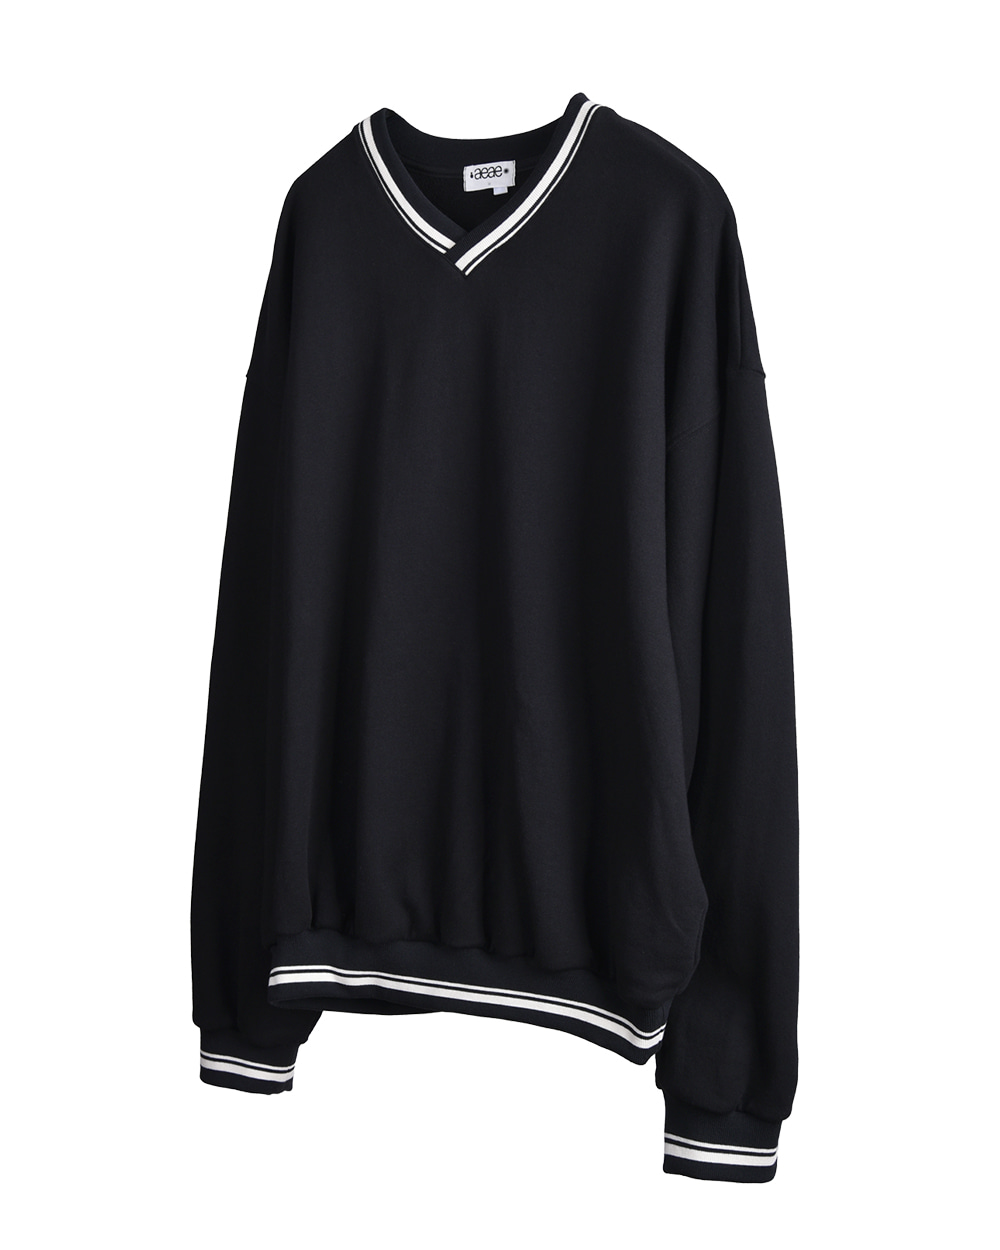 aeae V Neck Sweatshirts (Black)